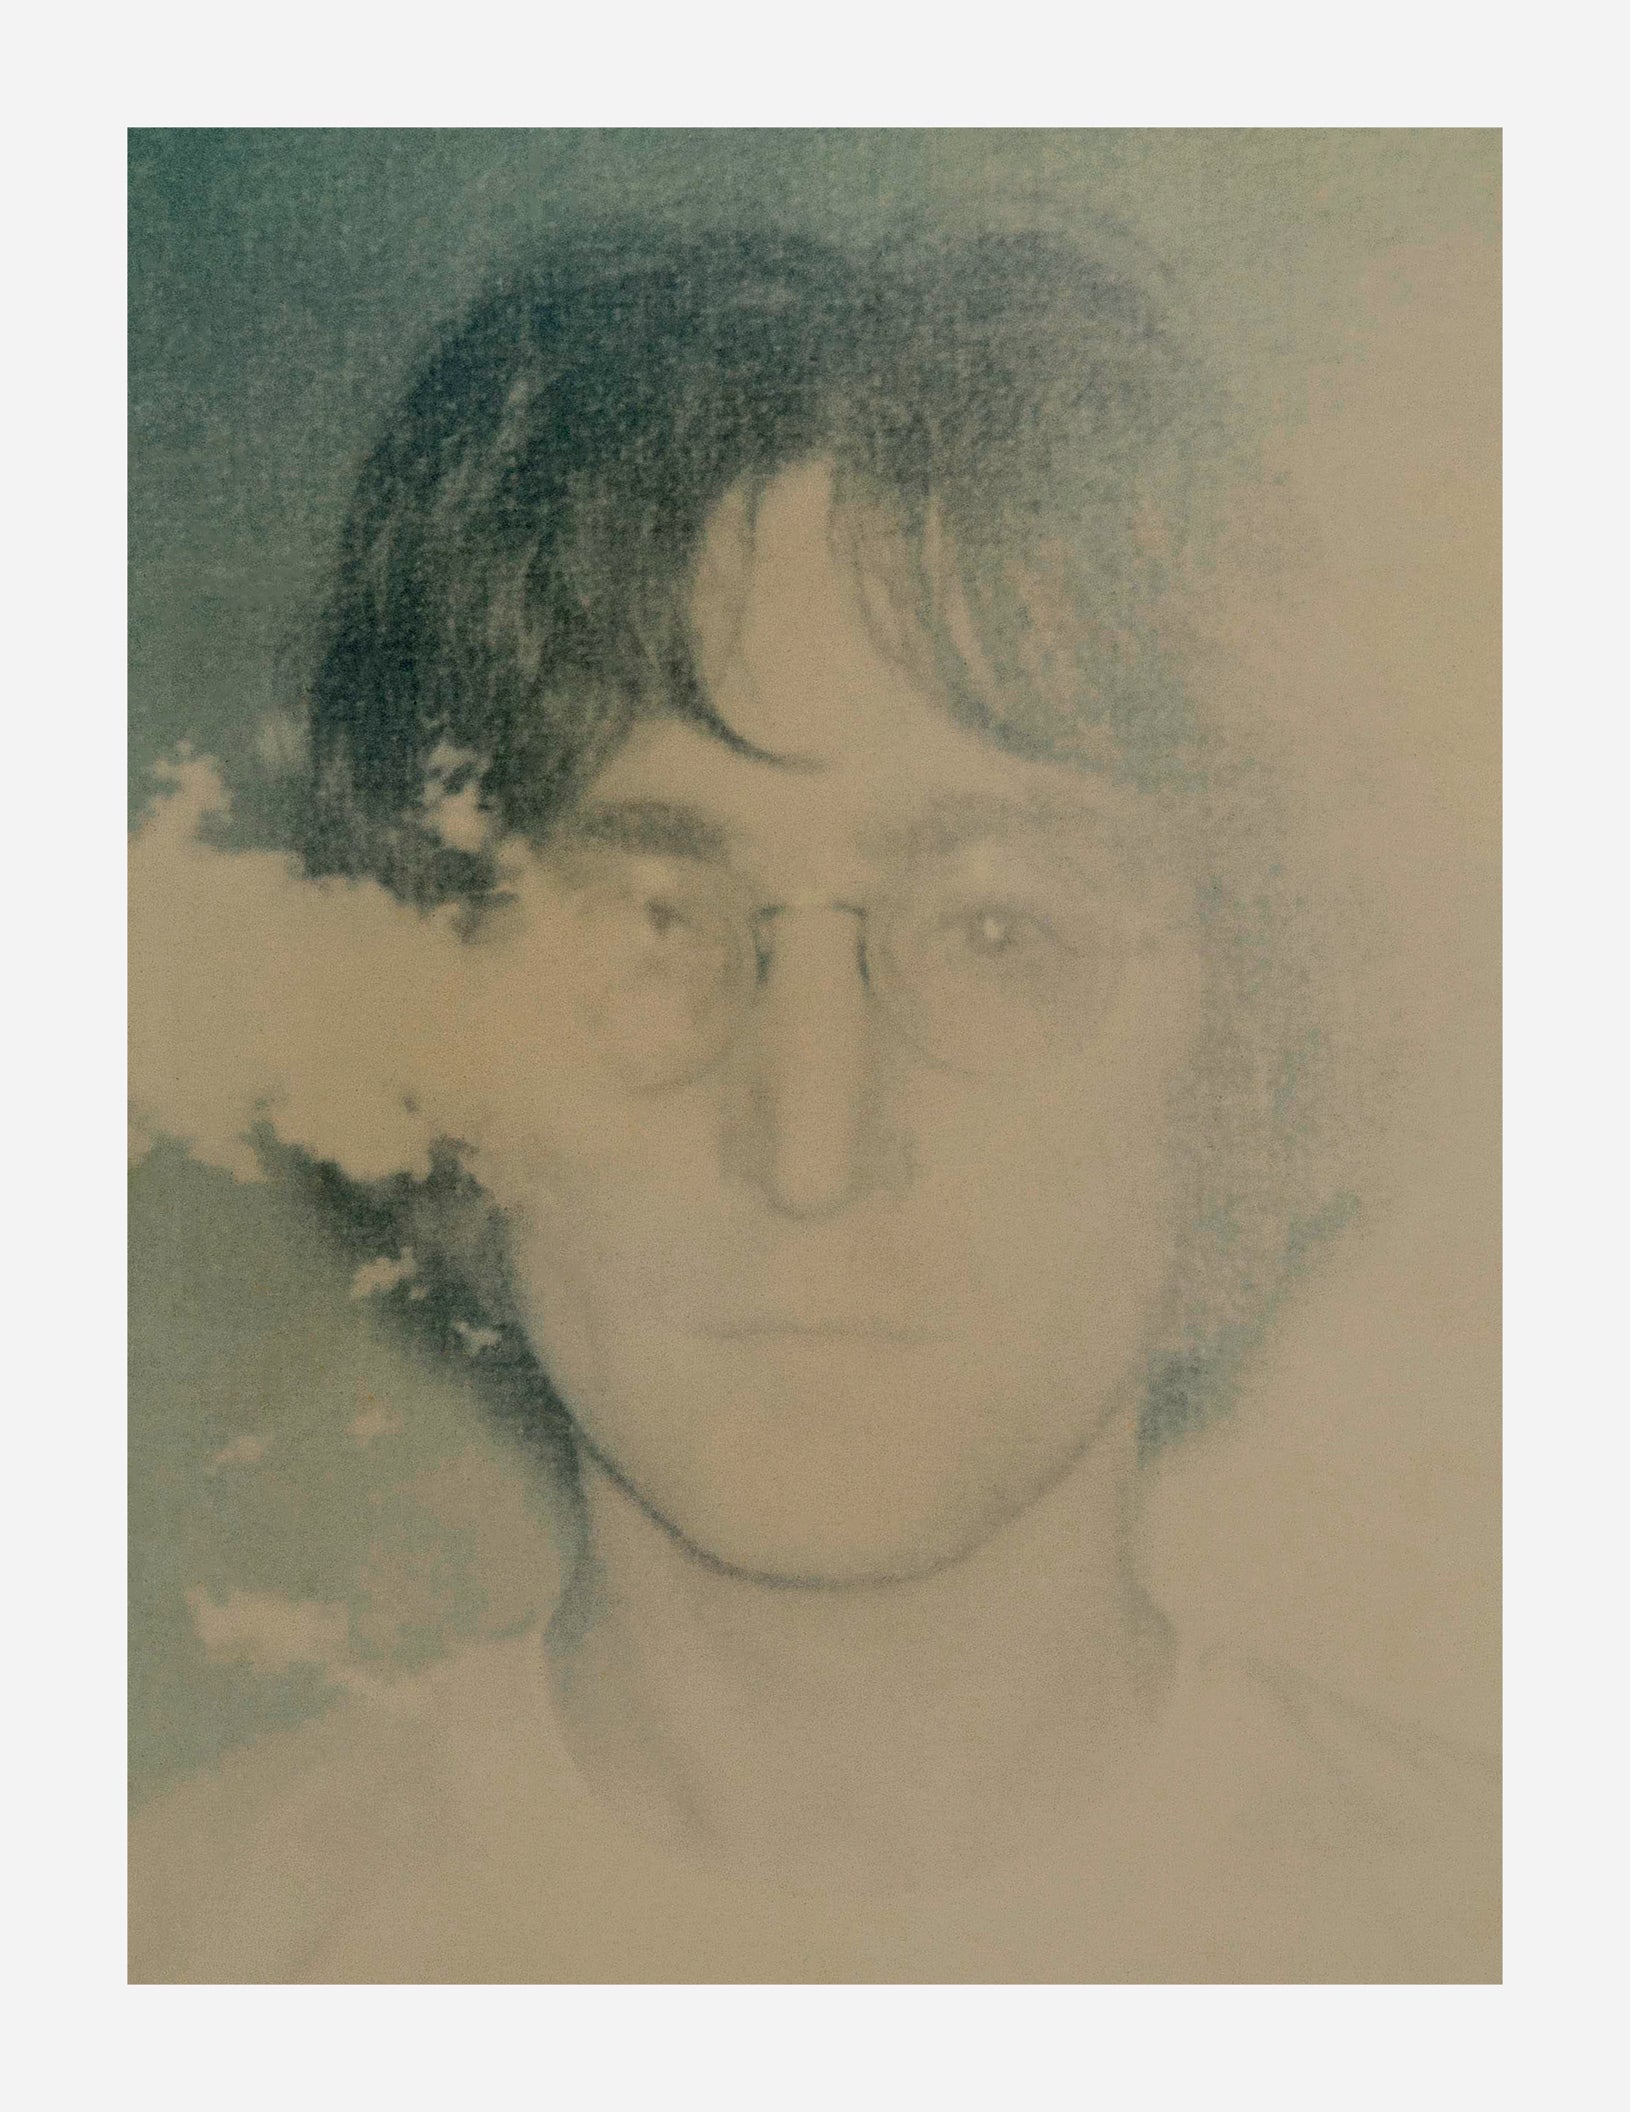 Imagine John Yoko - Limited Edt.